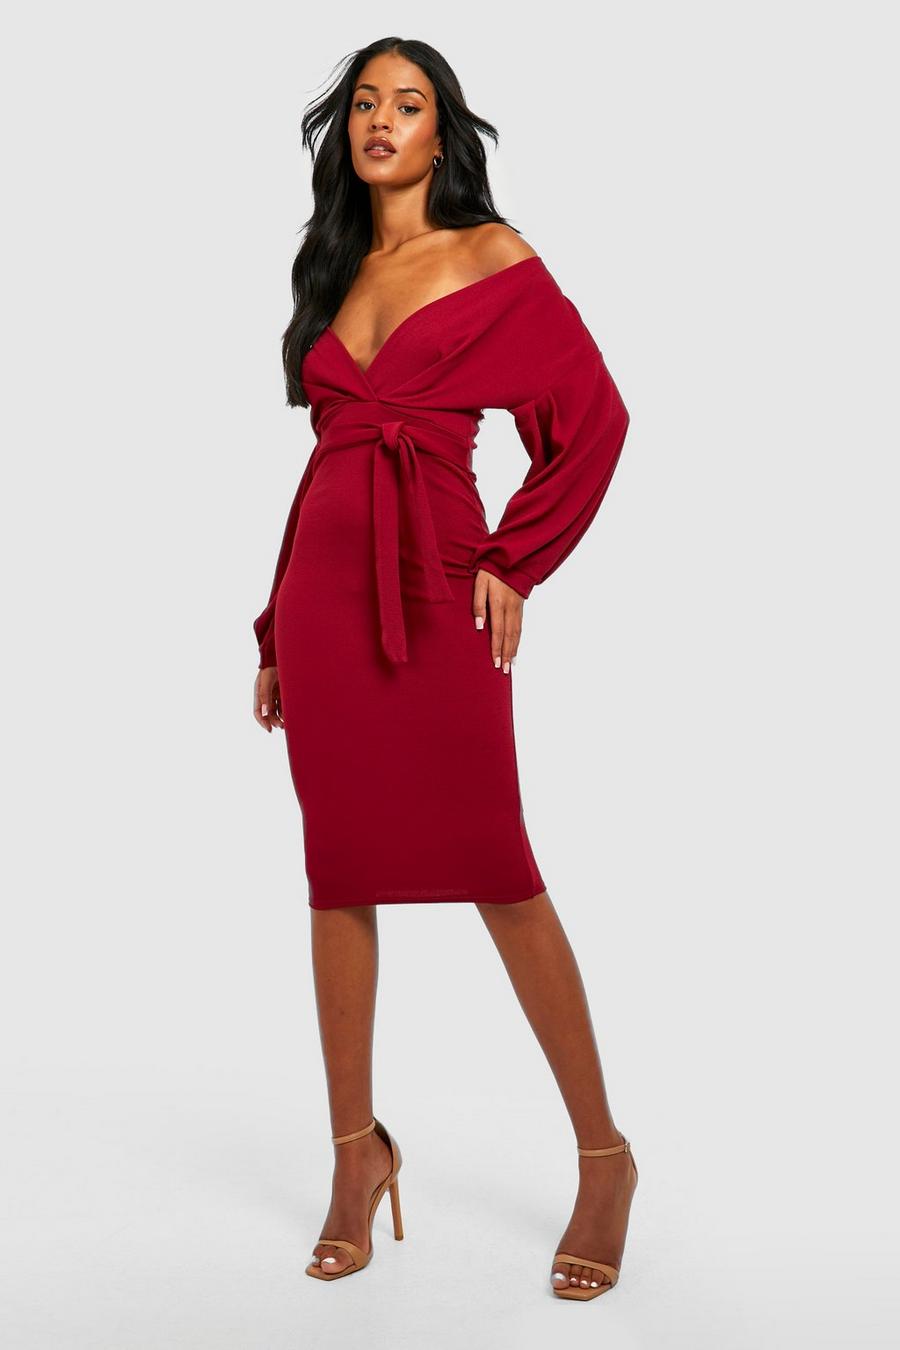 Berry red שמלת מידי מעטפת צמודה עם כתפיים חשופות לנשים גבוהות